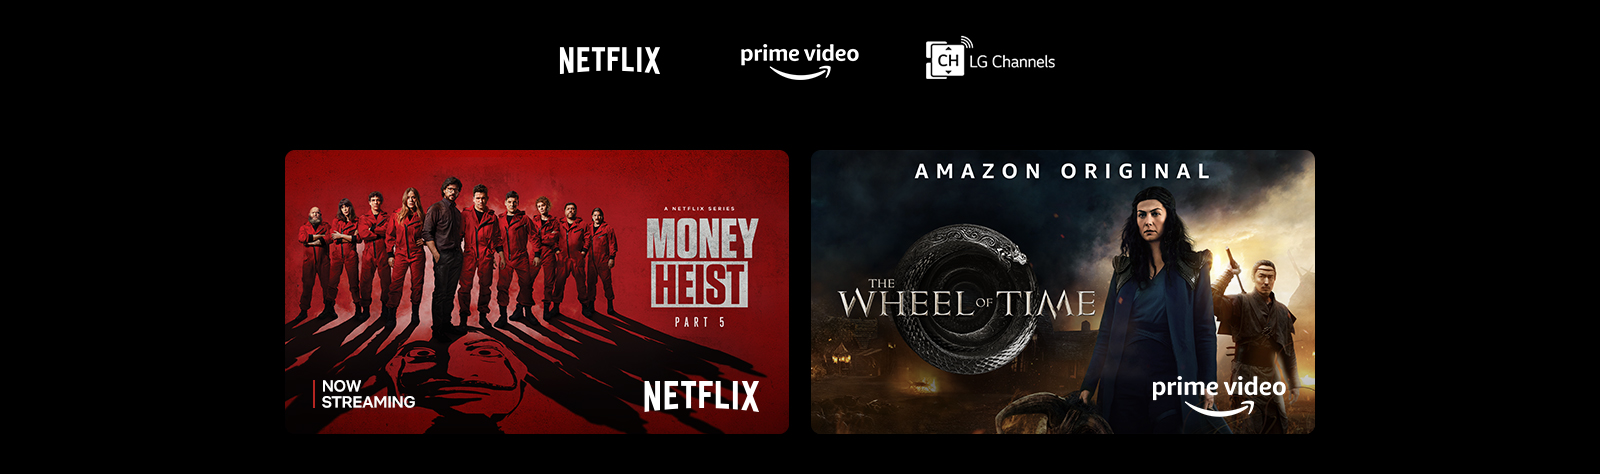 En pengar -heist -affisch från Netflix, Boba Fett de Disney Plus, The Wheel of Time De Prime Video, sett från Apple TV Plus och osäker de HBO Max